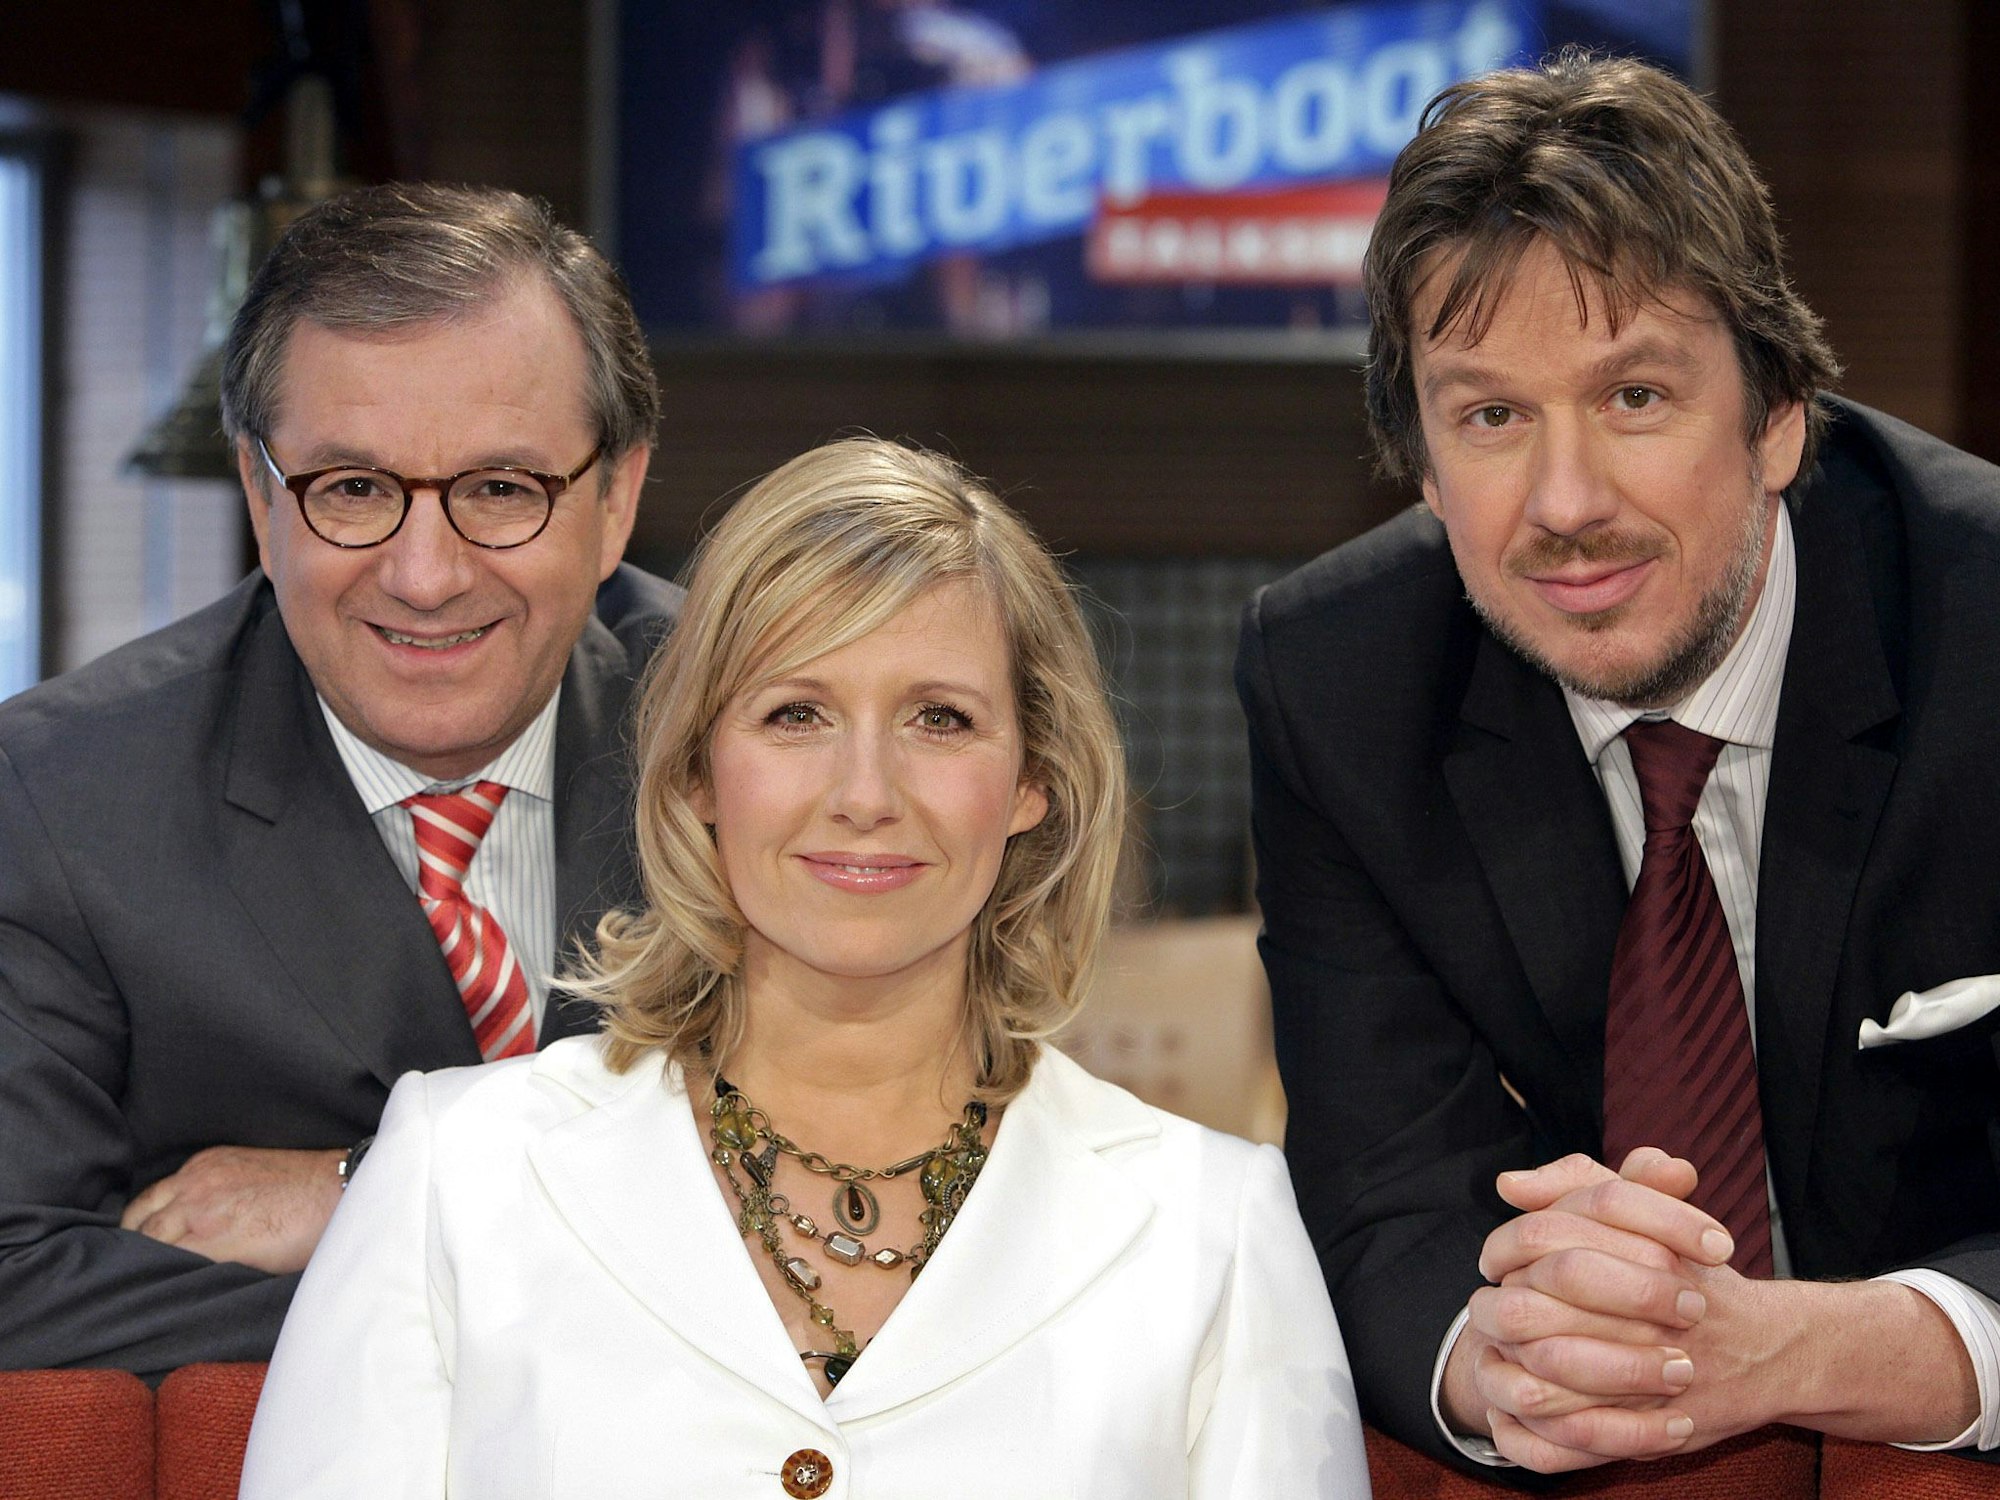 Das neue Moderatorenteam der MDR Talkshow "Riverboat" Jan Hofer, Andrea Kiewel und Jörg Kachelmann (vl).